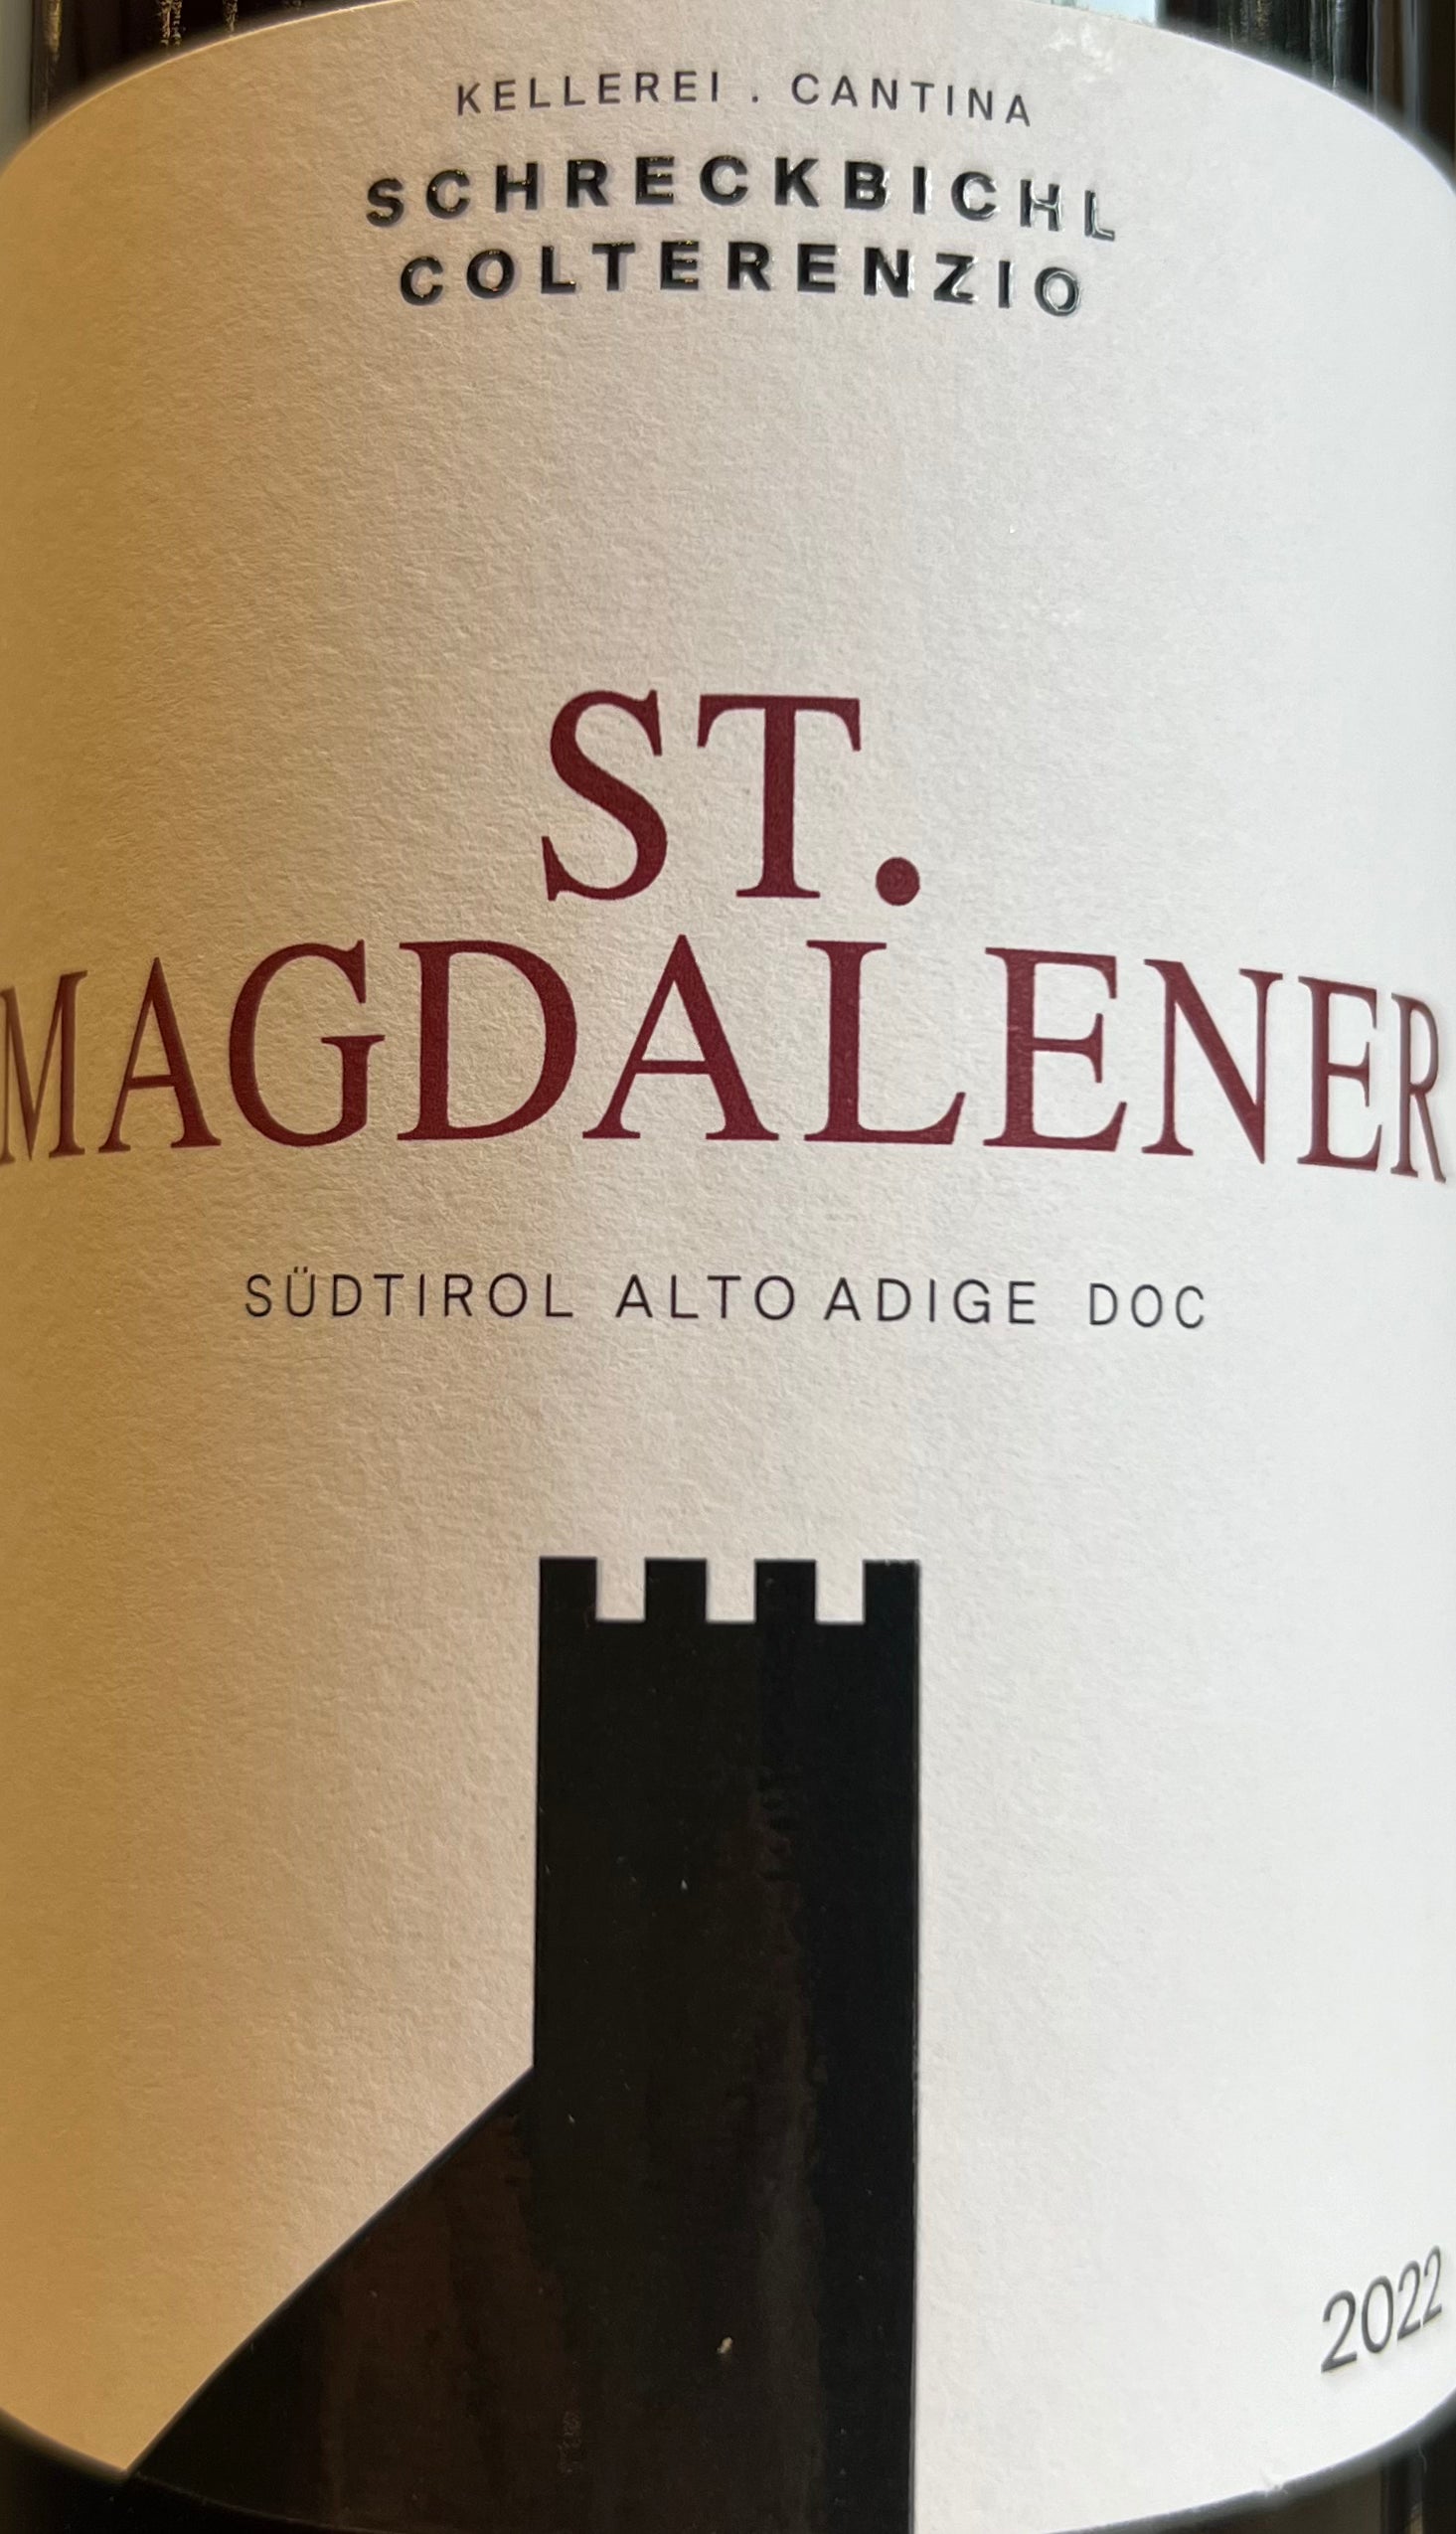 – Vernatsch/Lagrein The Feed Magdalener\' - Colterenzio Alto \'St. - Wine Adige